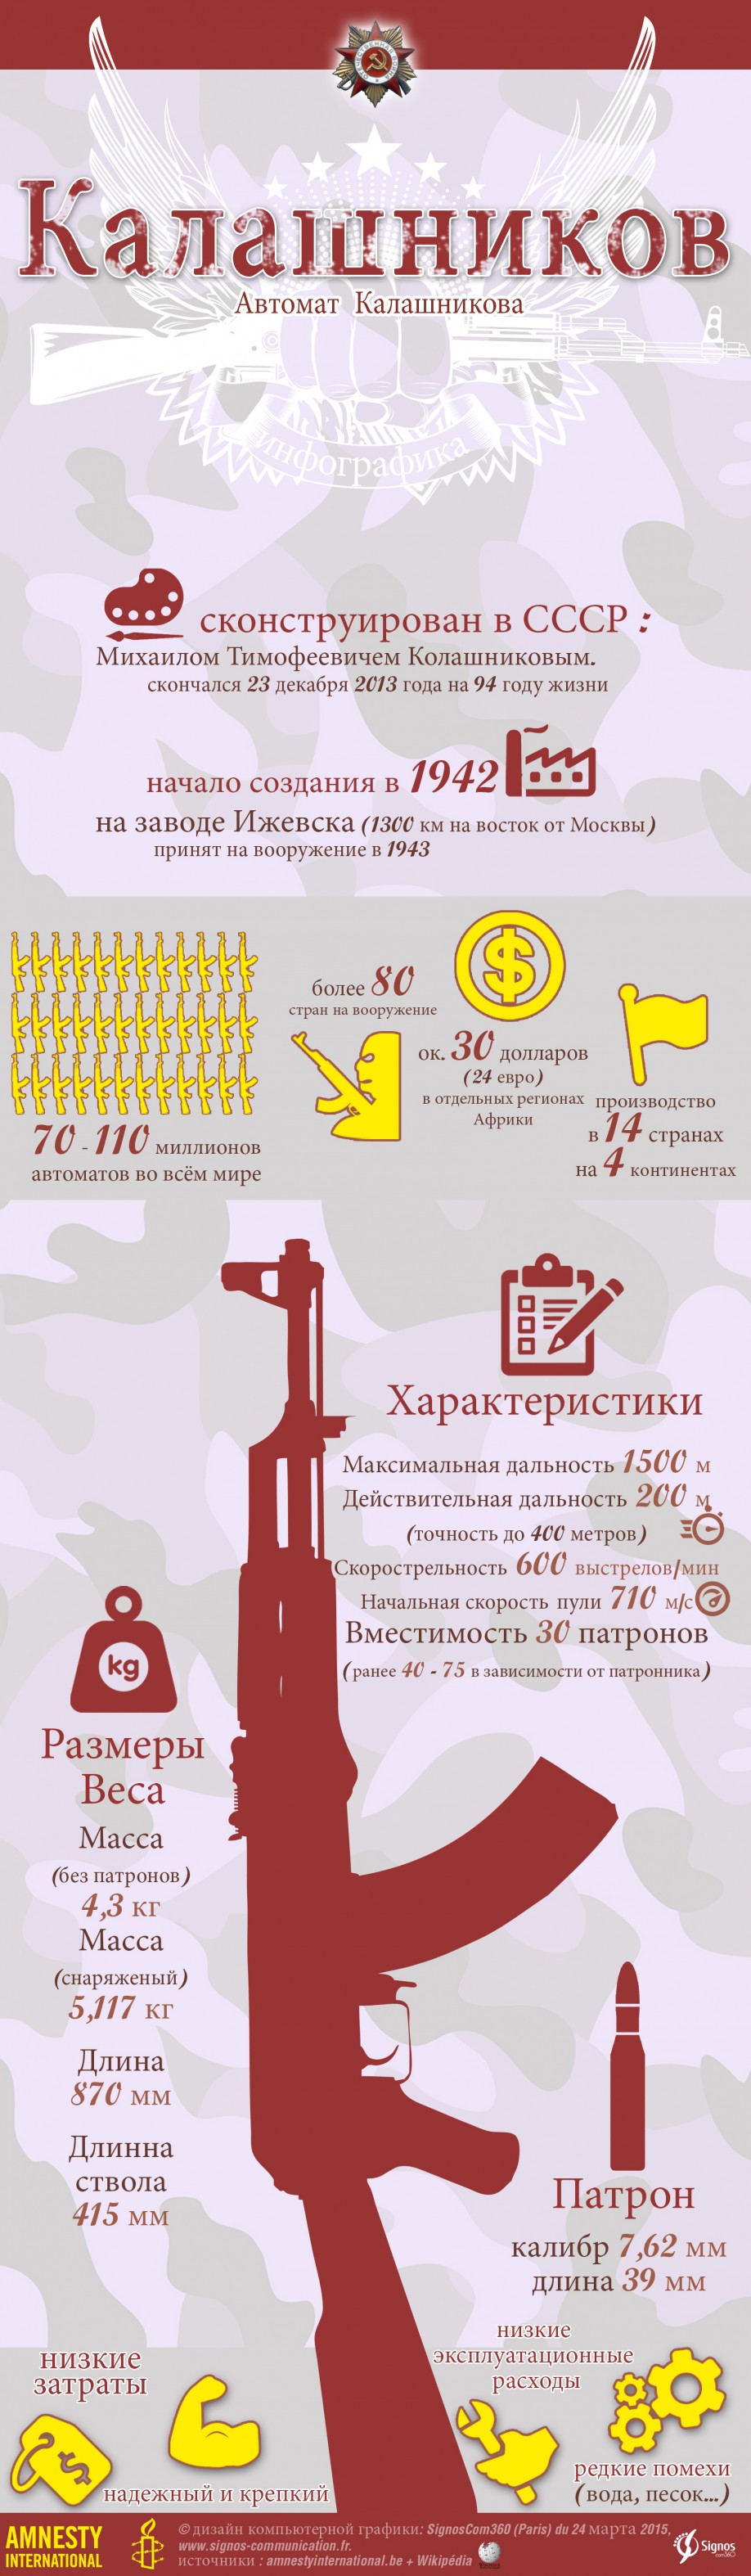 infographie, kalachnikov, arme, ak47